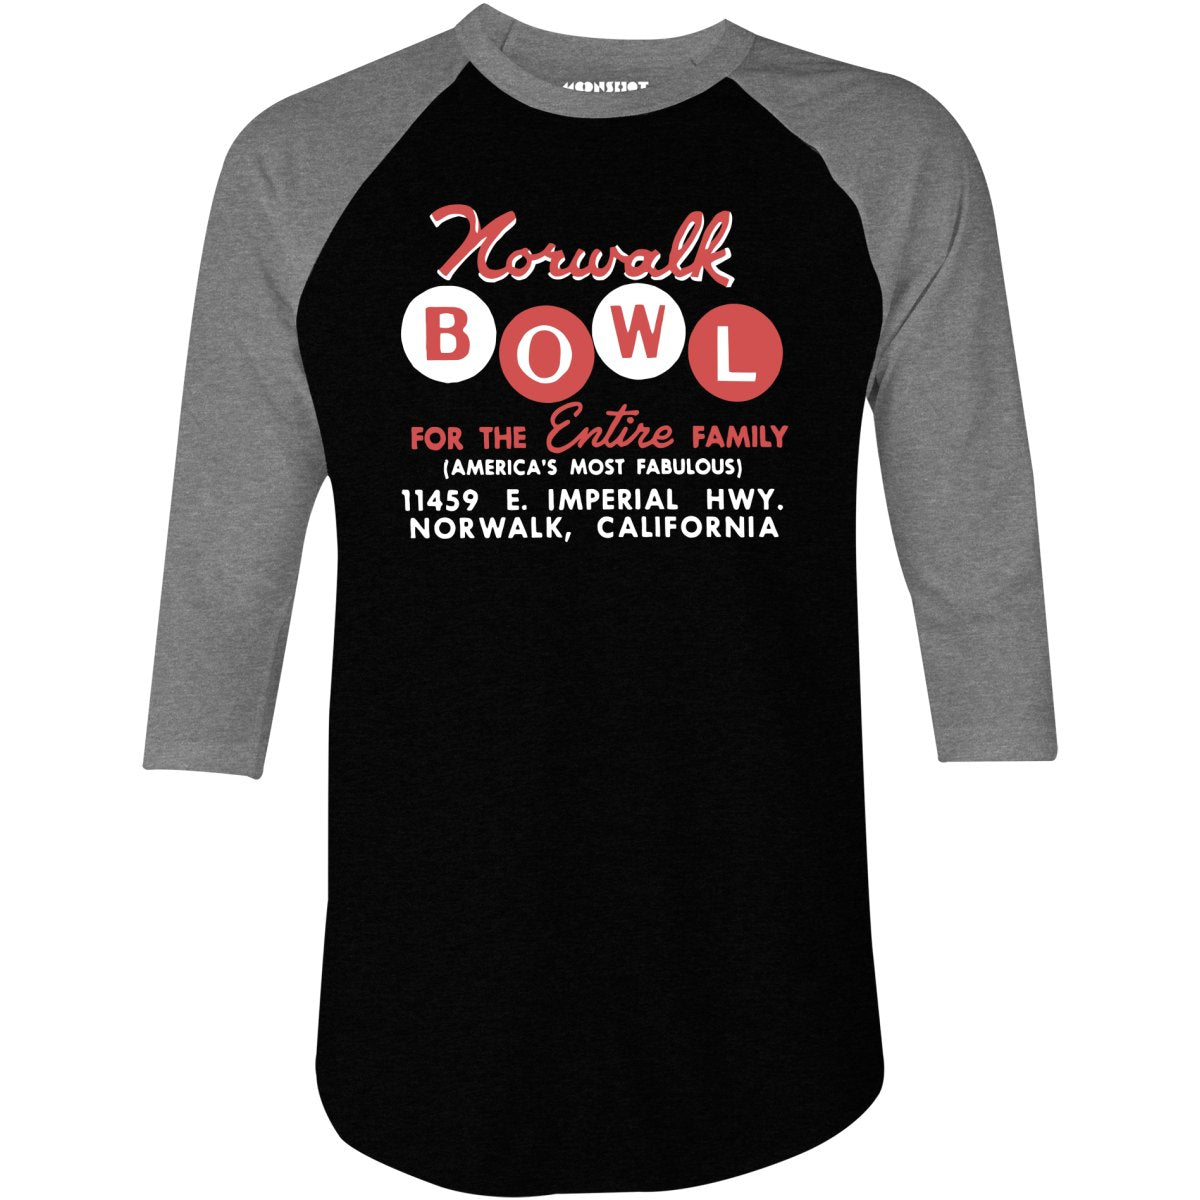 Norwalk Bowl - Norwalk, CA - Vintage Bowling Alley - 3/4 Sleeve Raglan T-Shirt